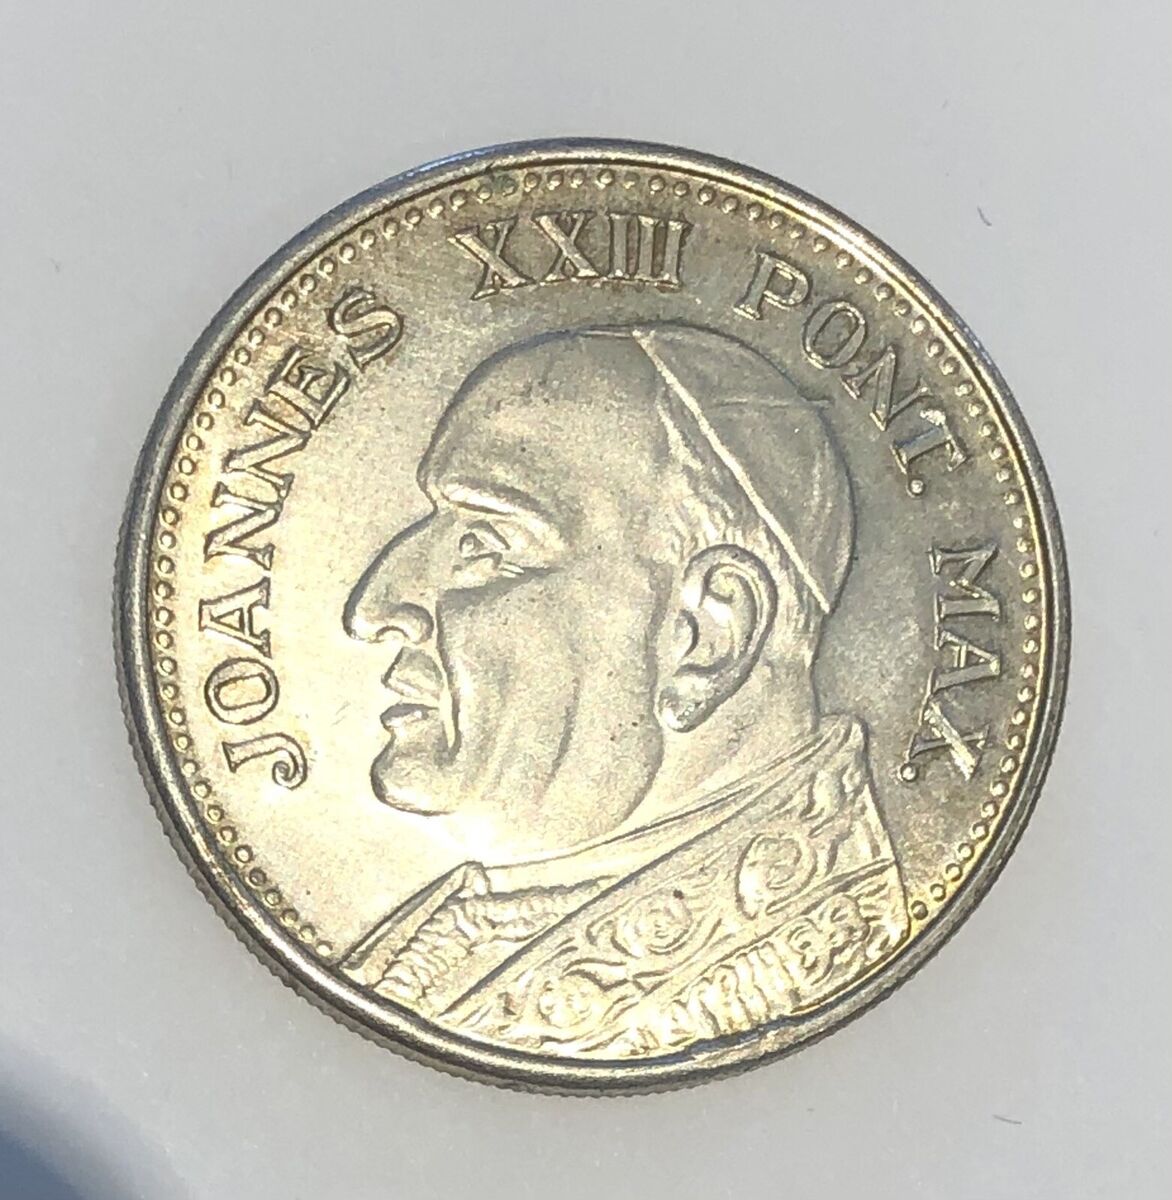 Vatican - Pope John XXIII - Election Medal by Pietro Celestino Giampaoli